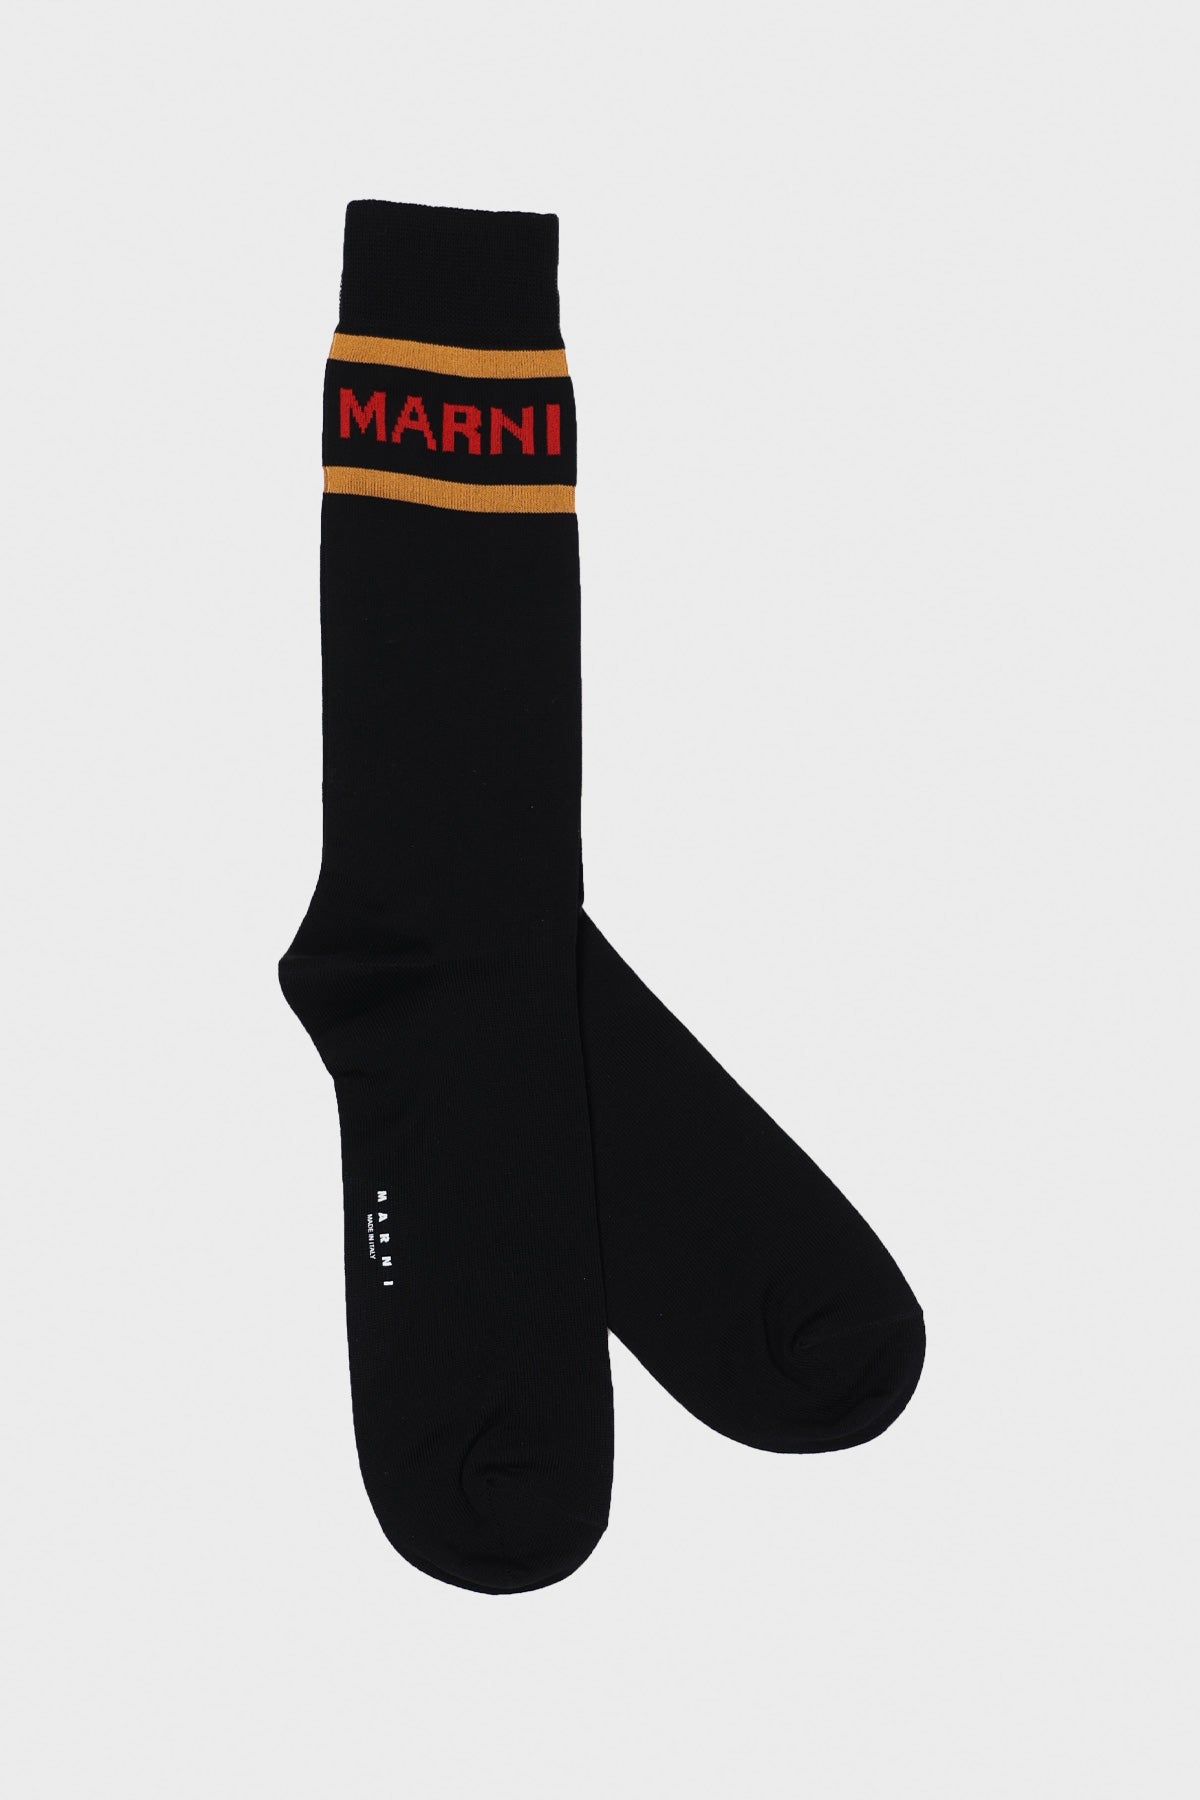 Marni - Logo Socks - Black - Canoe Club